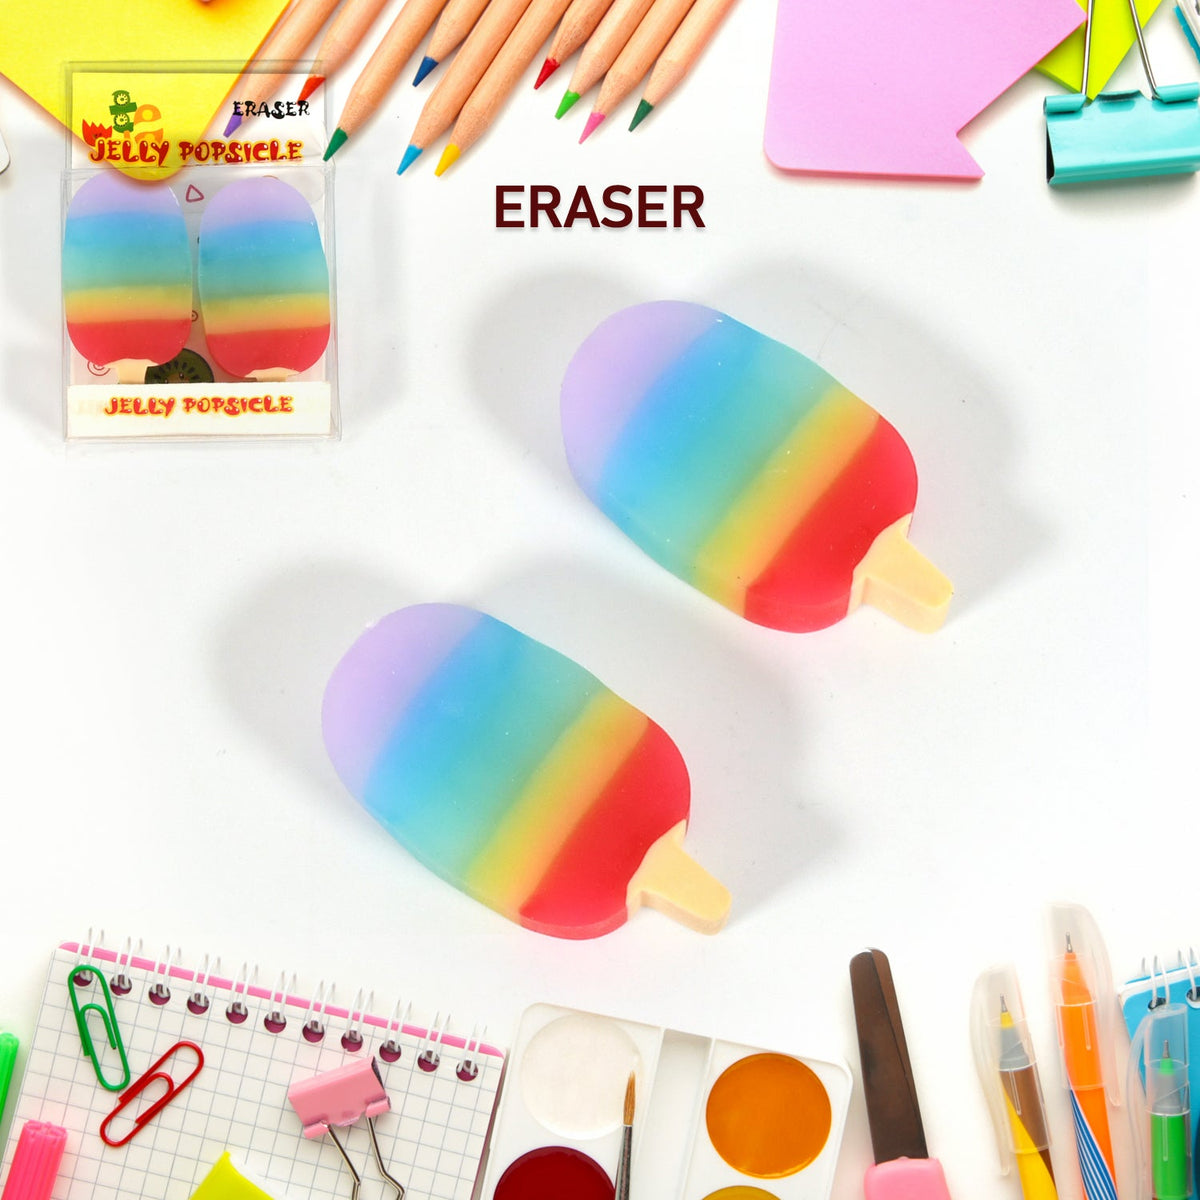 17523 Jelly Popsicle Shape Fancy & Stylish Erasers, Mini Eraser Creative Cute Novelty Eraser for Children Eraser Set for Return Gift, Birthday Party, School Prize (2 Pc Set)